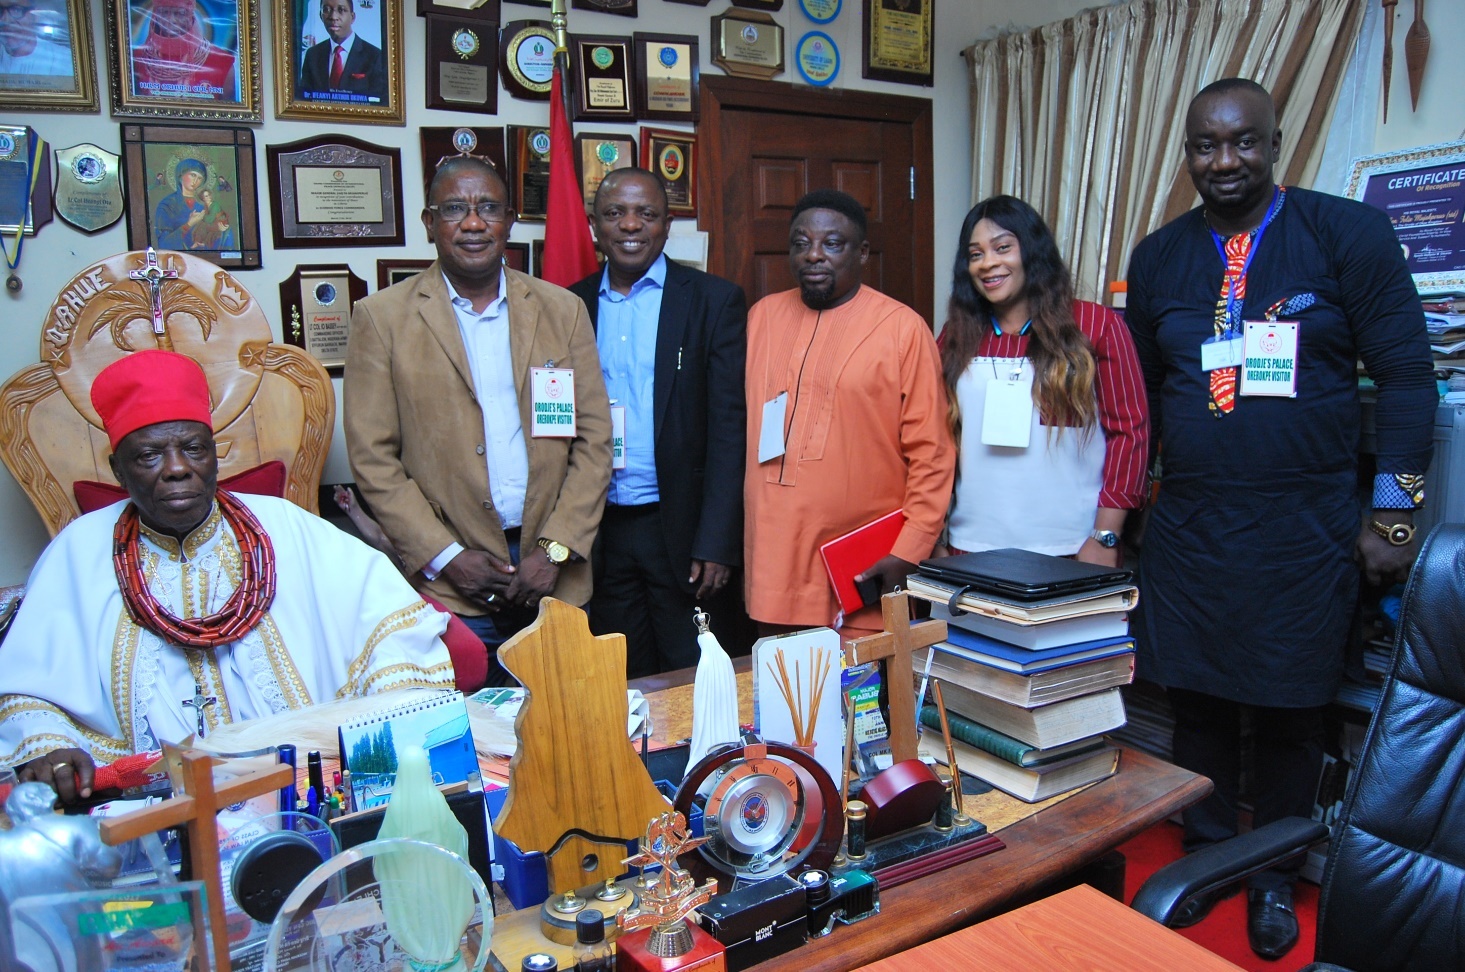 Heritage felicitates with Governor Okowa on birthday, visits Okpe Monarch